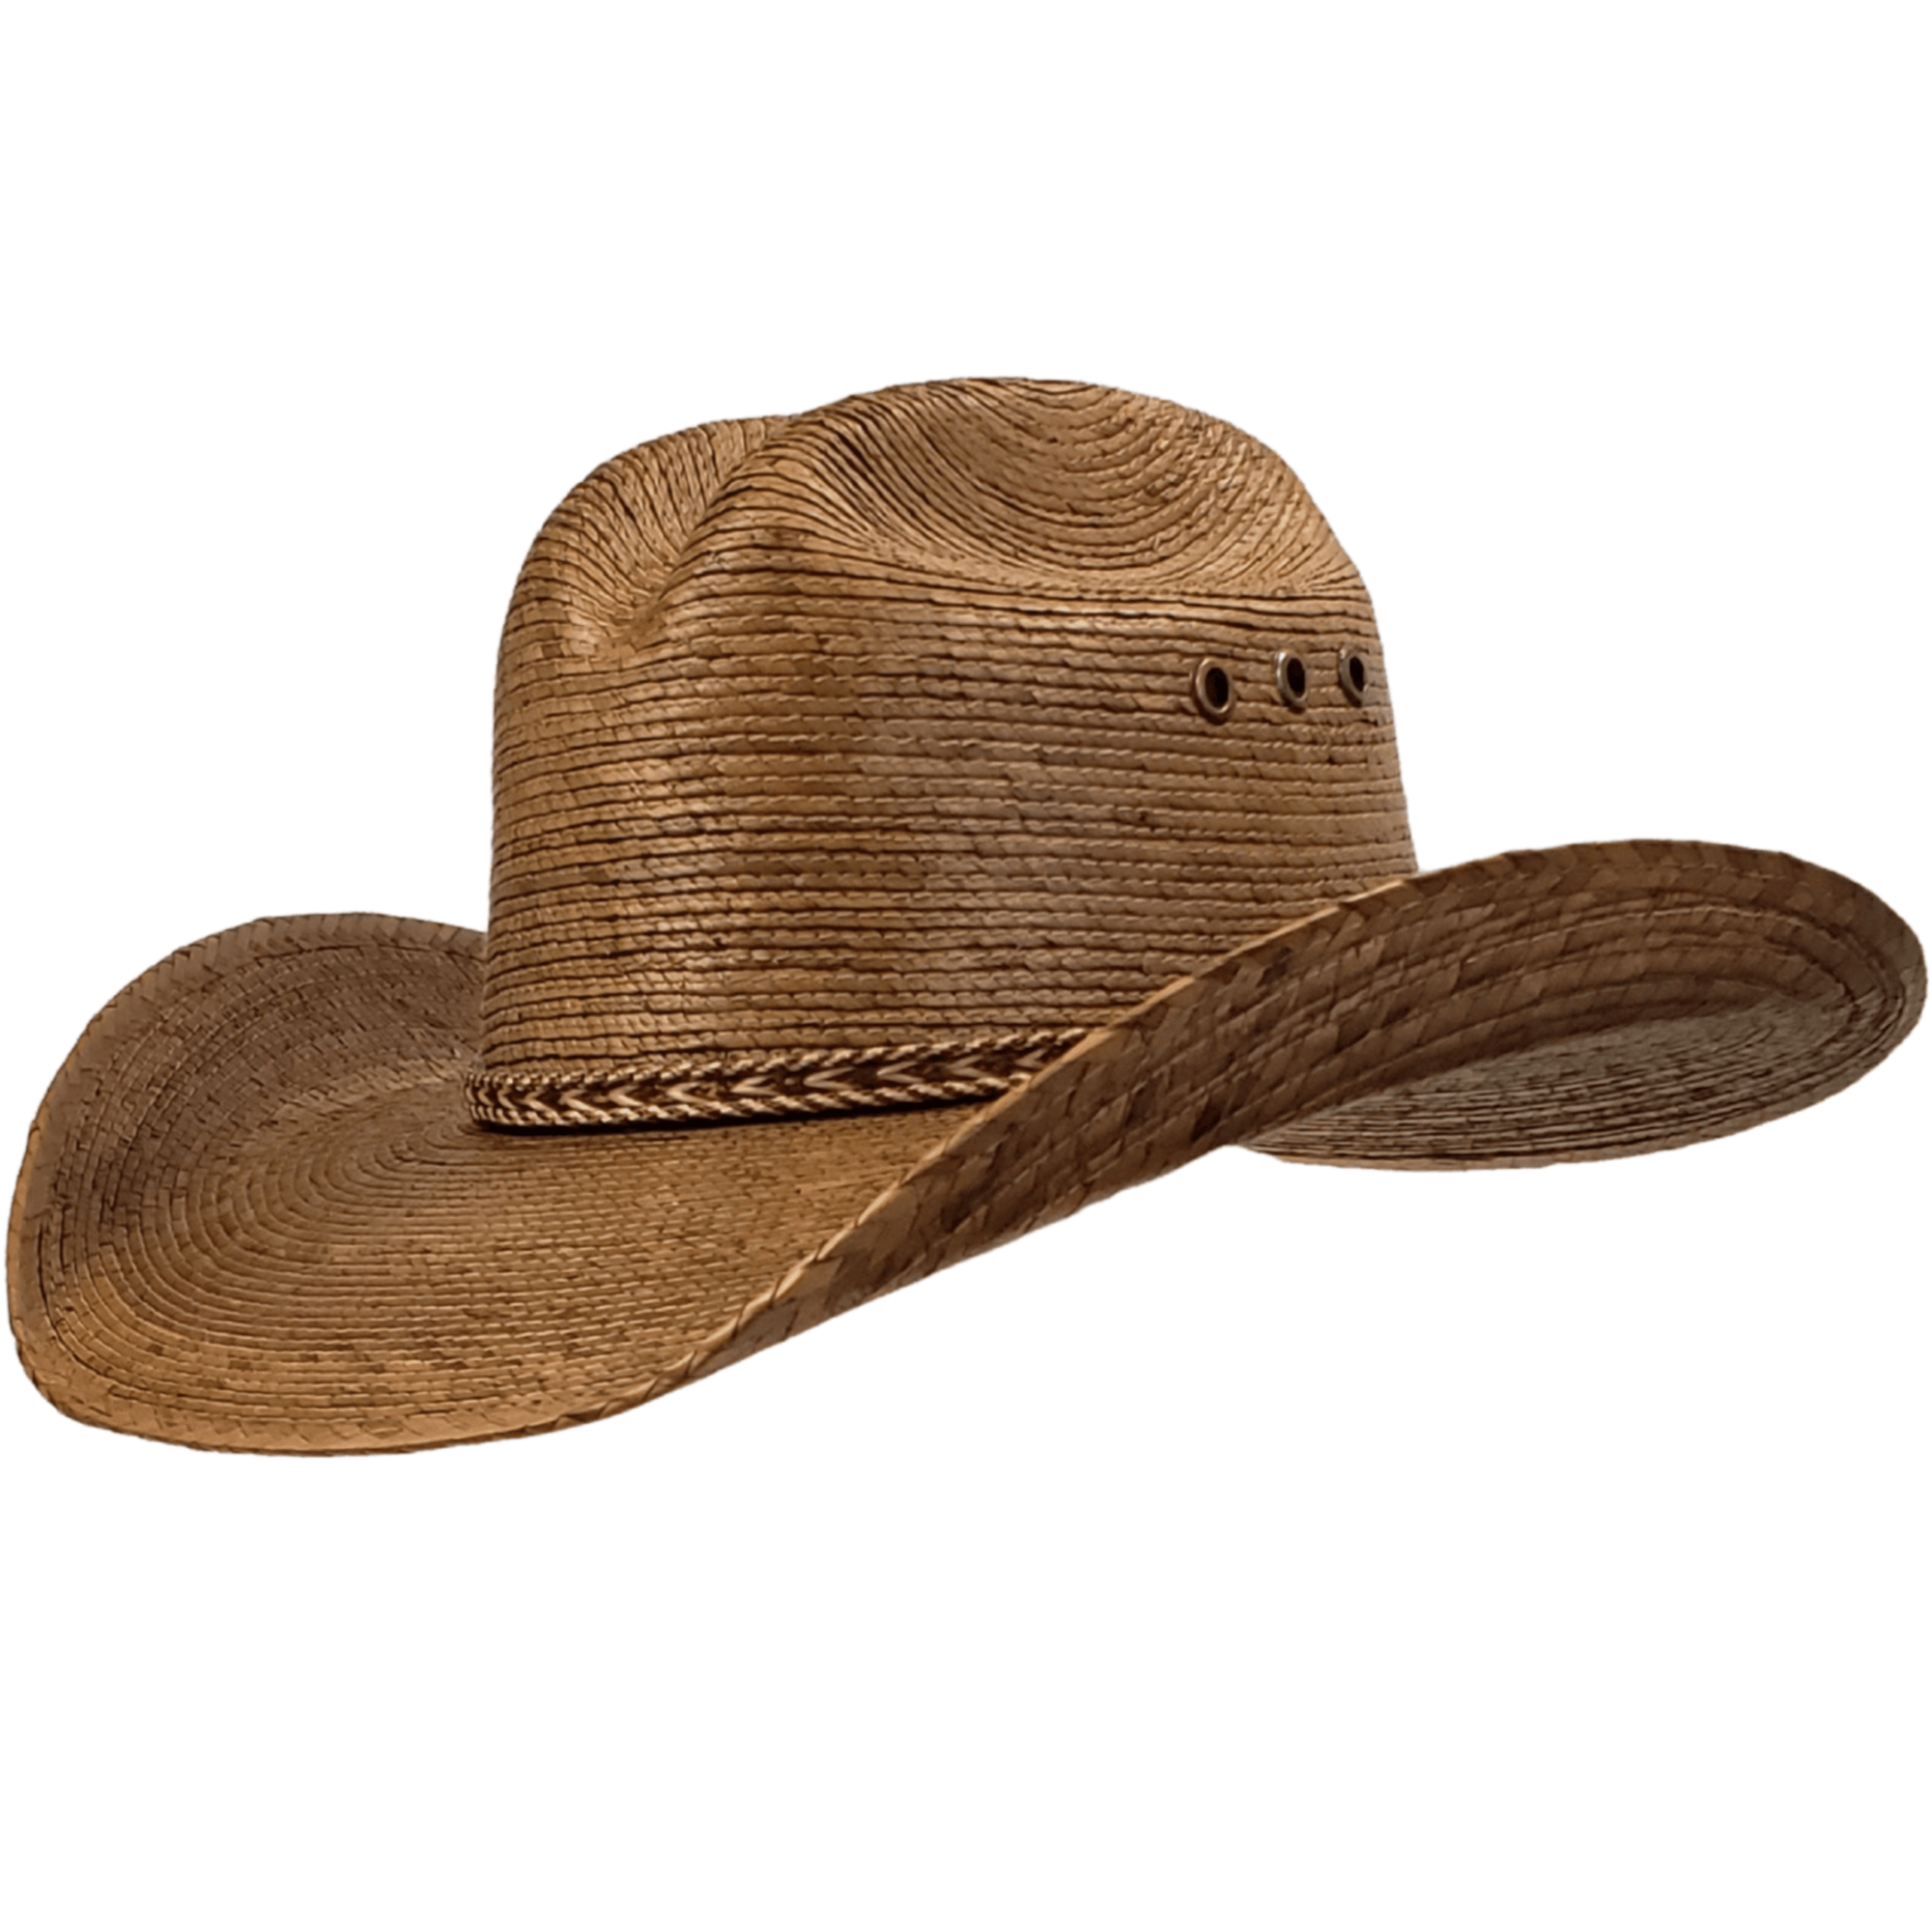 Gone Country Hats Men & Women's Hats Nashville Brown - Palm